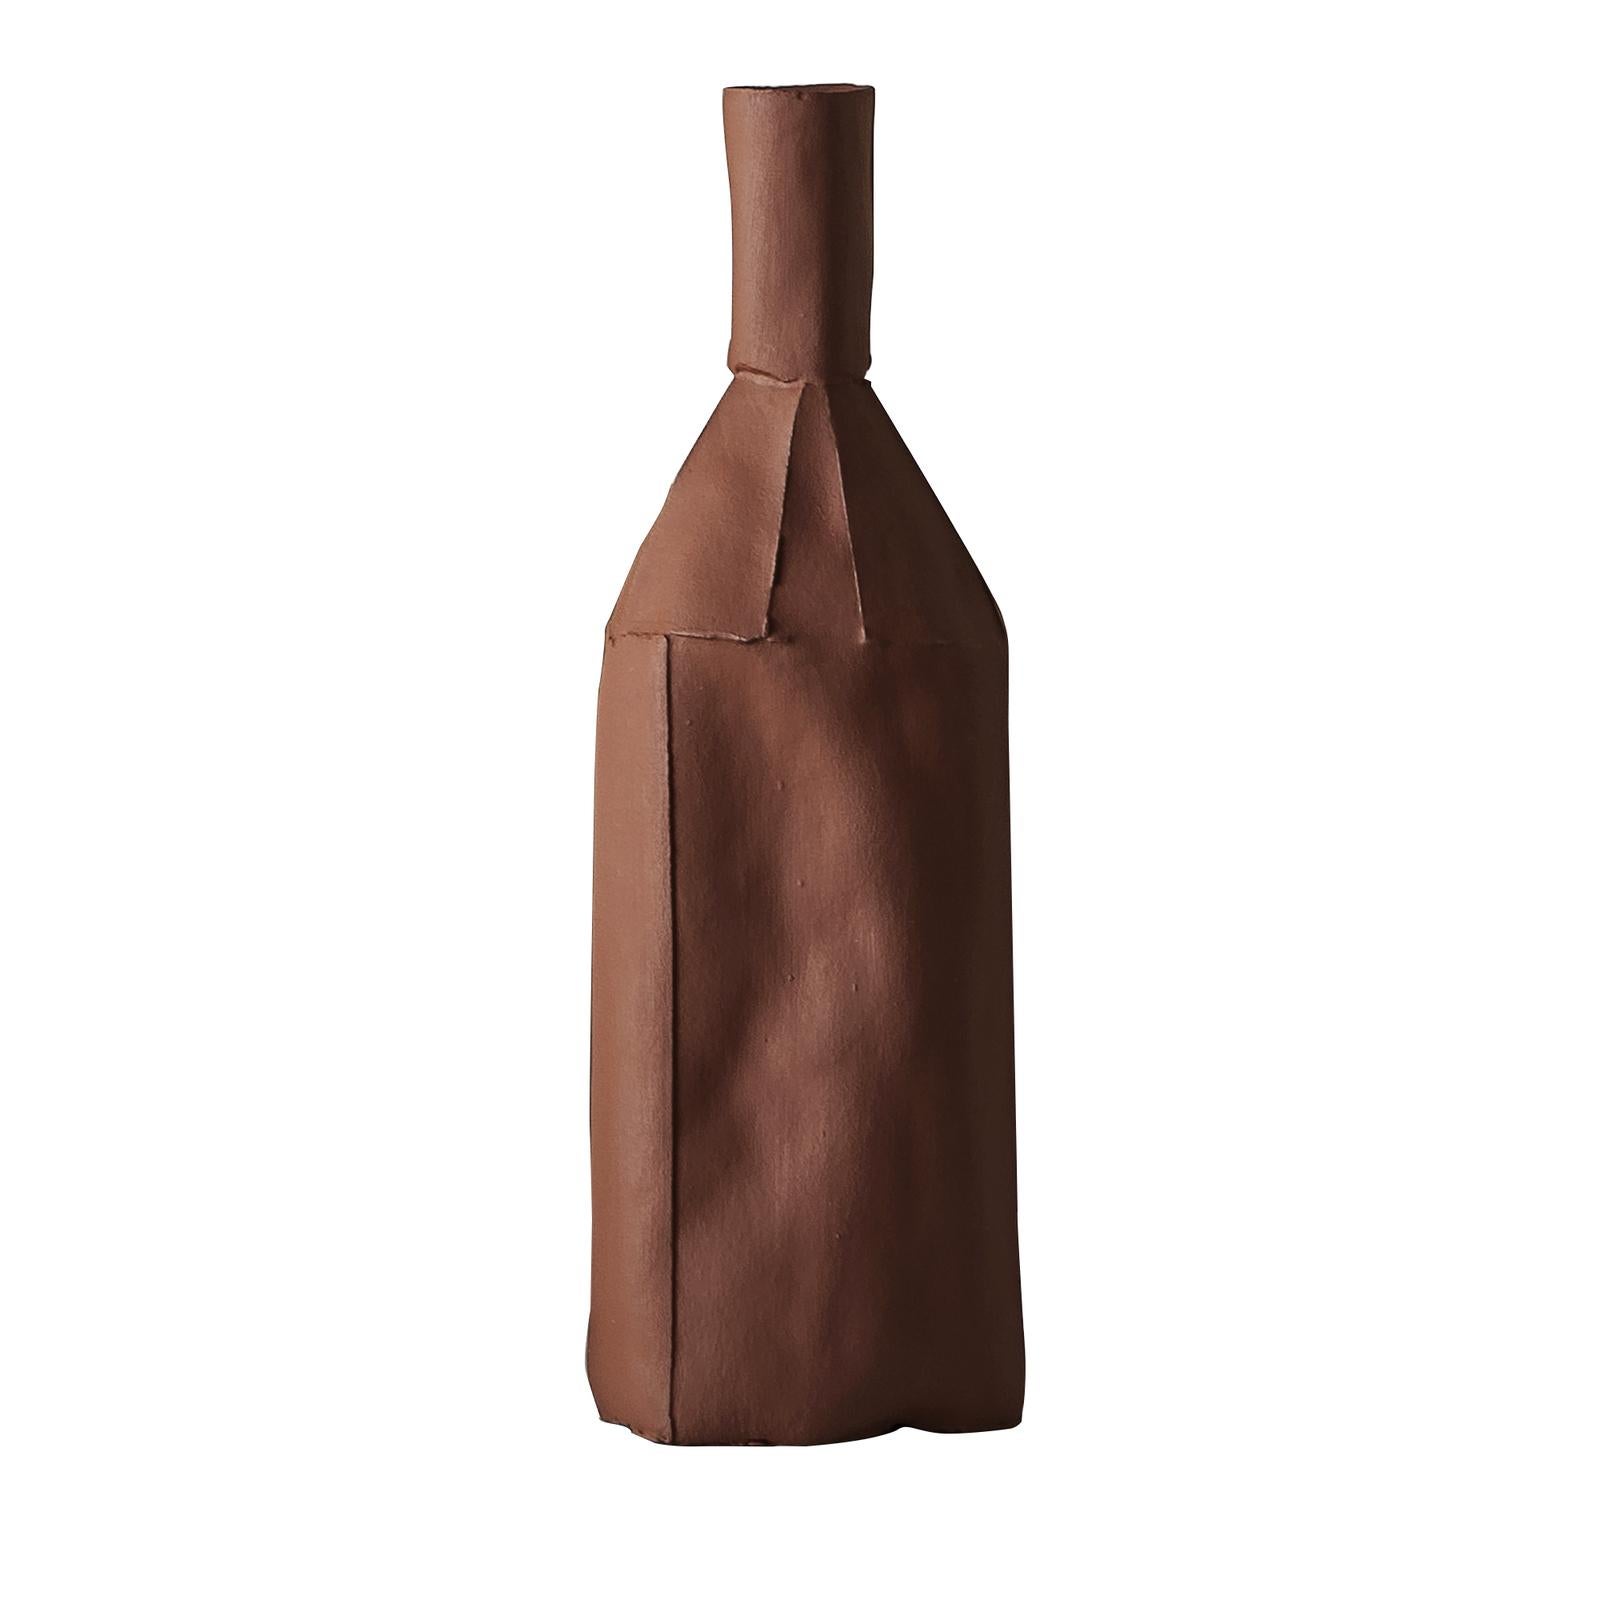 Contemporary Ceramic Cartocci Liscia Texture Maroon Decorative Bottle